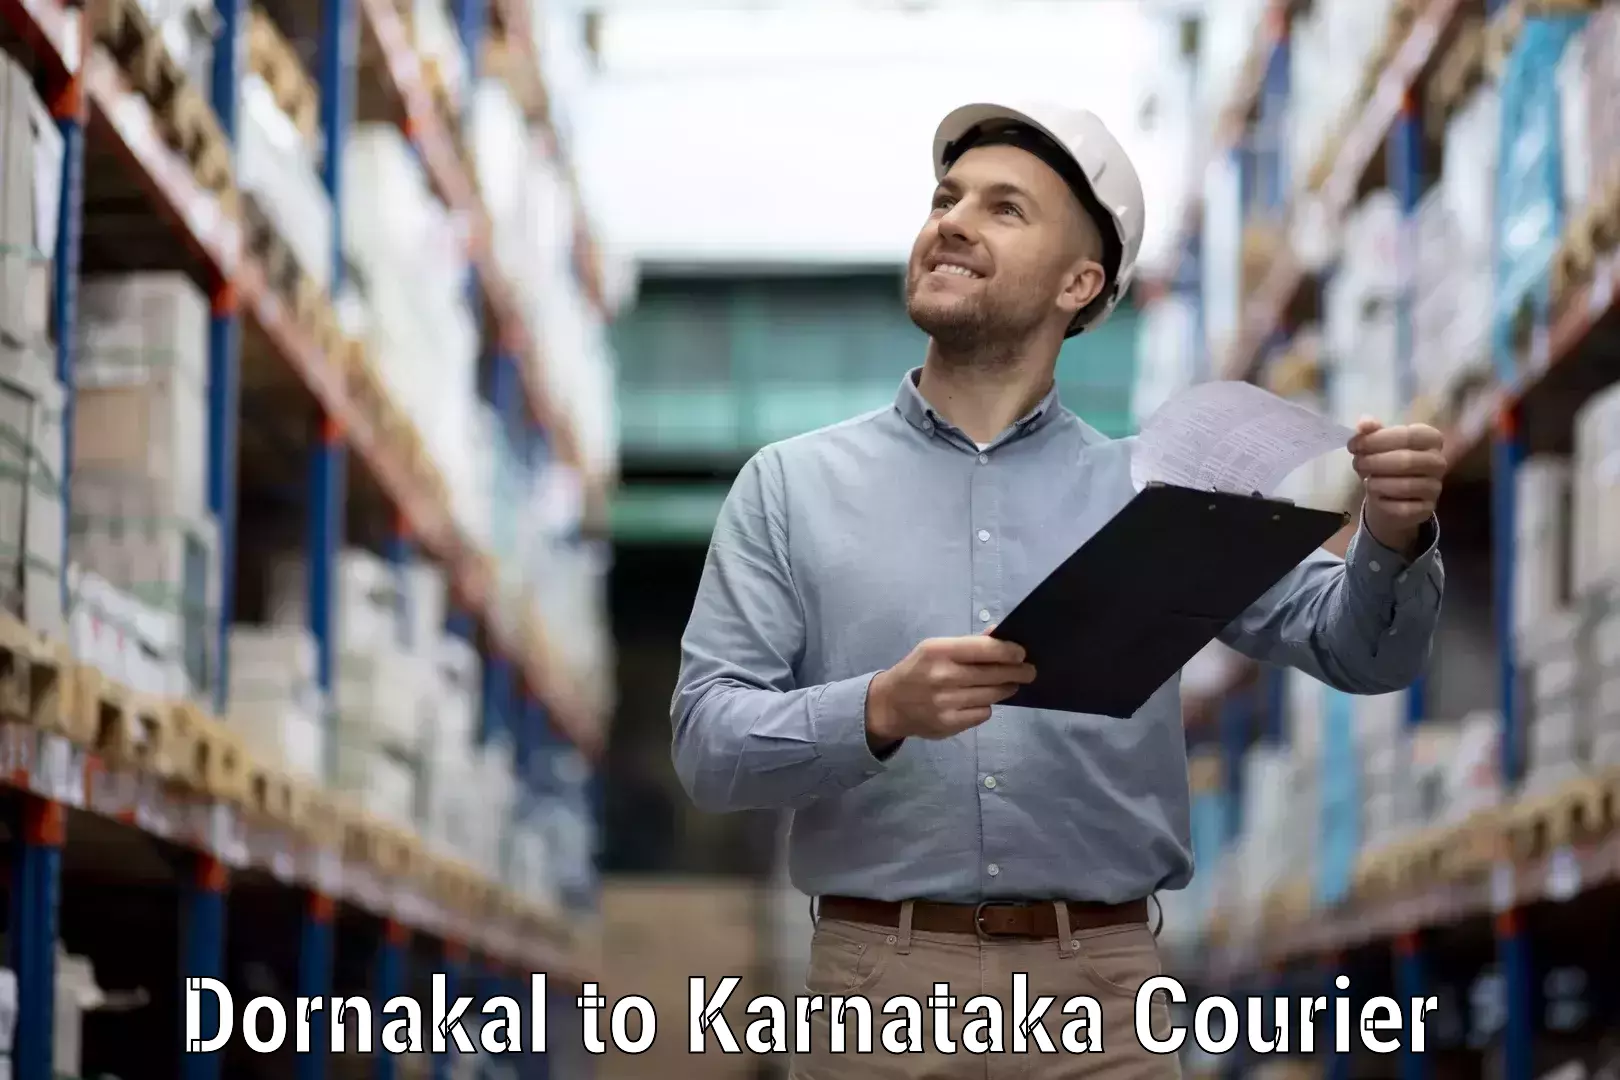 Efficient cargo handling Dornakal to Karnataka